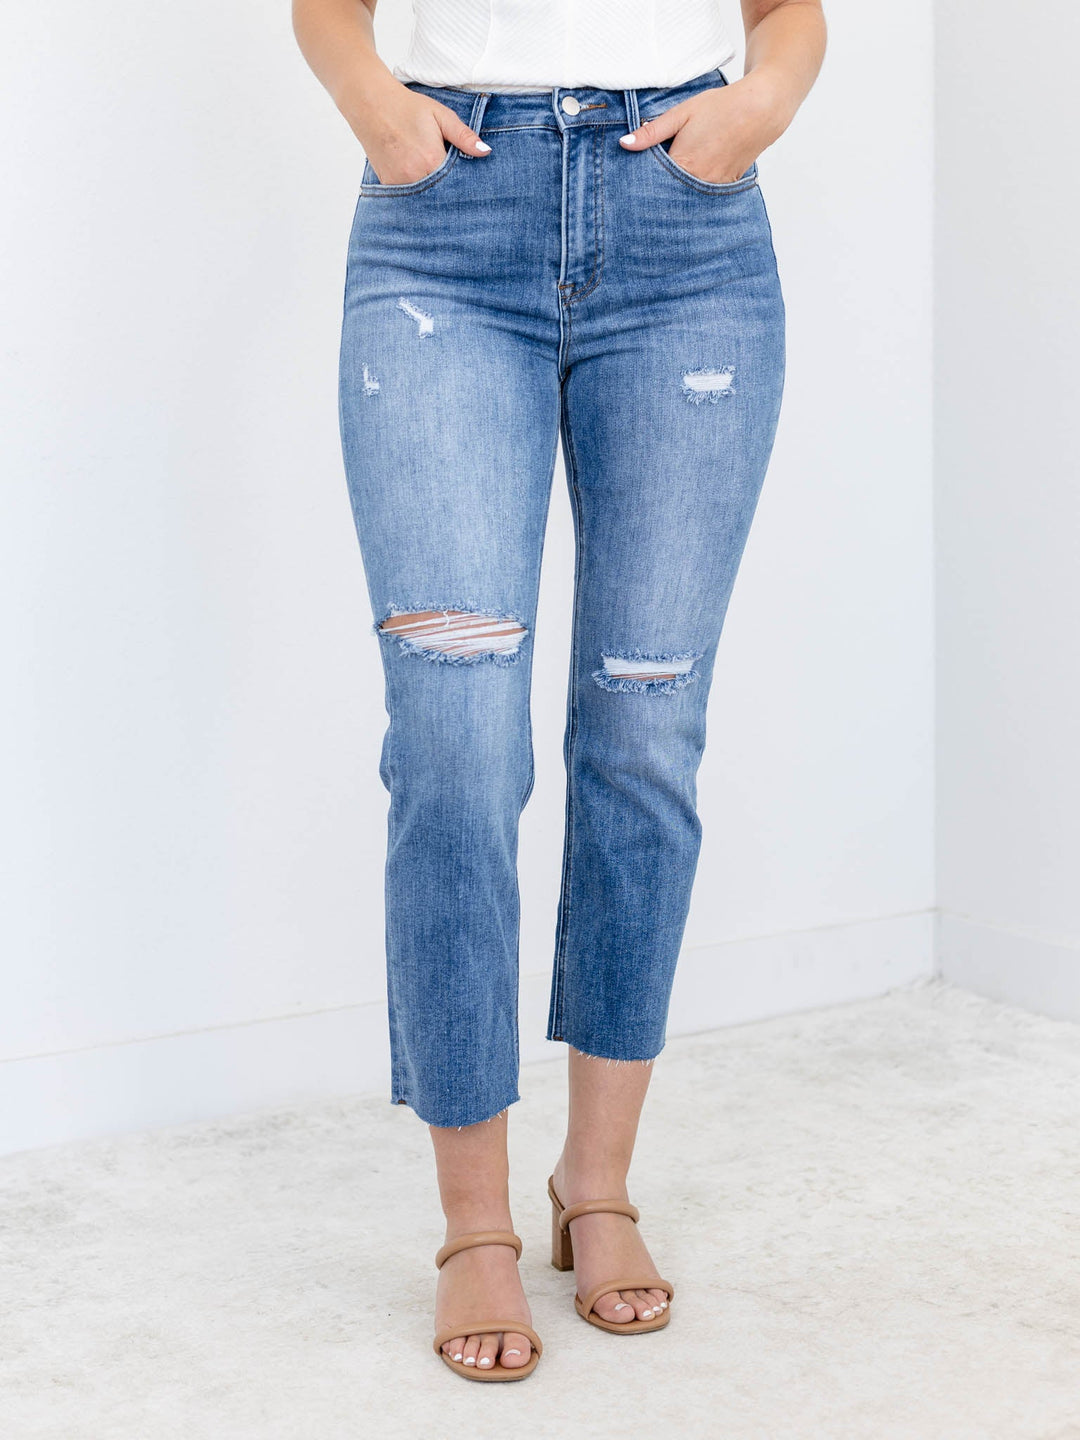 RISEN Medium High Rise Crop Slim StraightDenim jeans